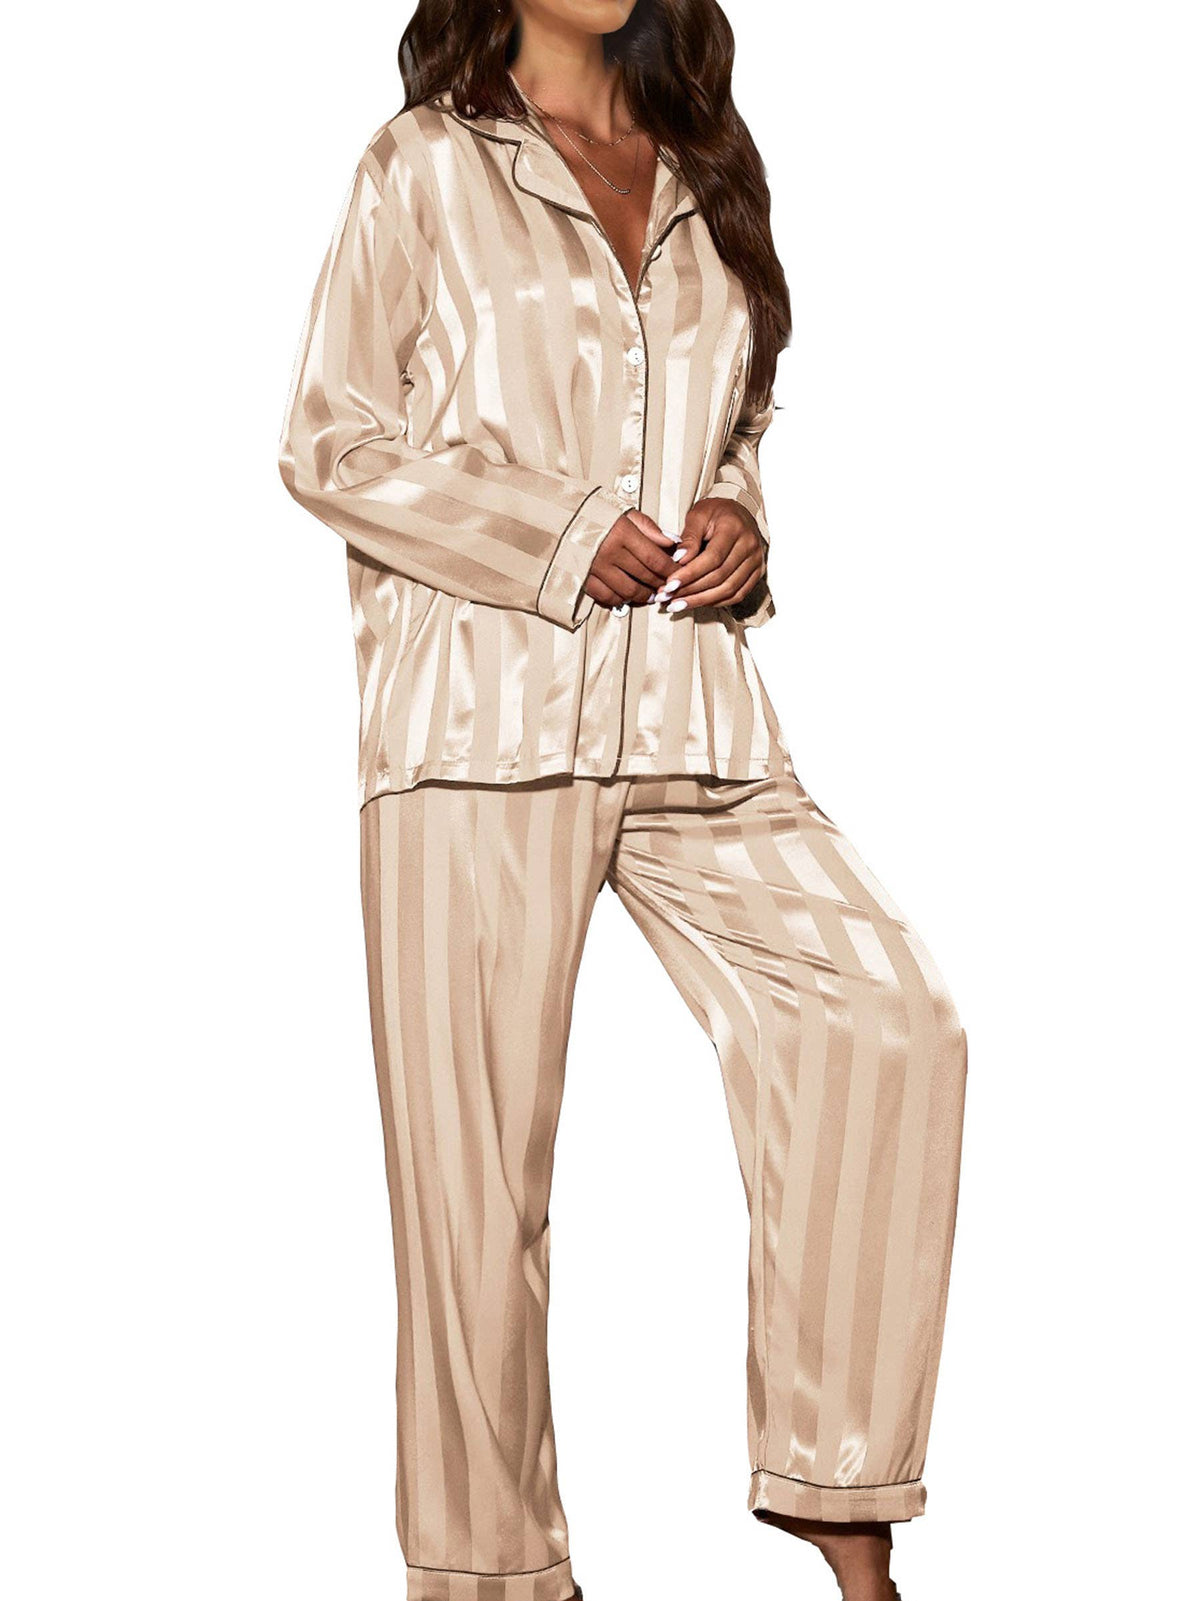 2 Piece Button Front Sleepwear Pants Set Loungewear: XL / Pink